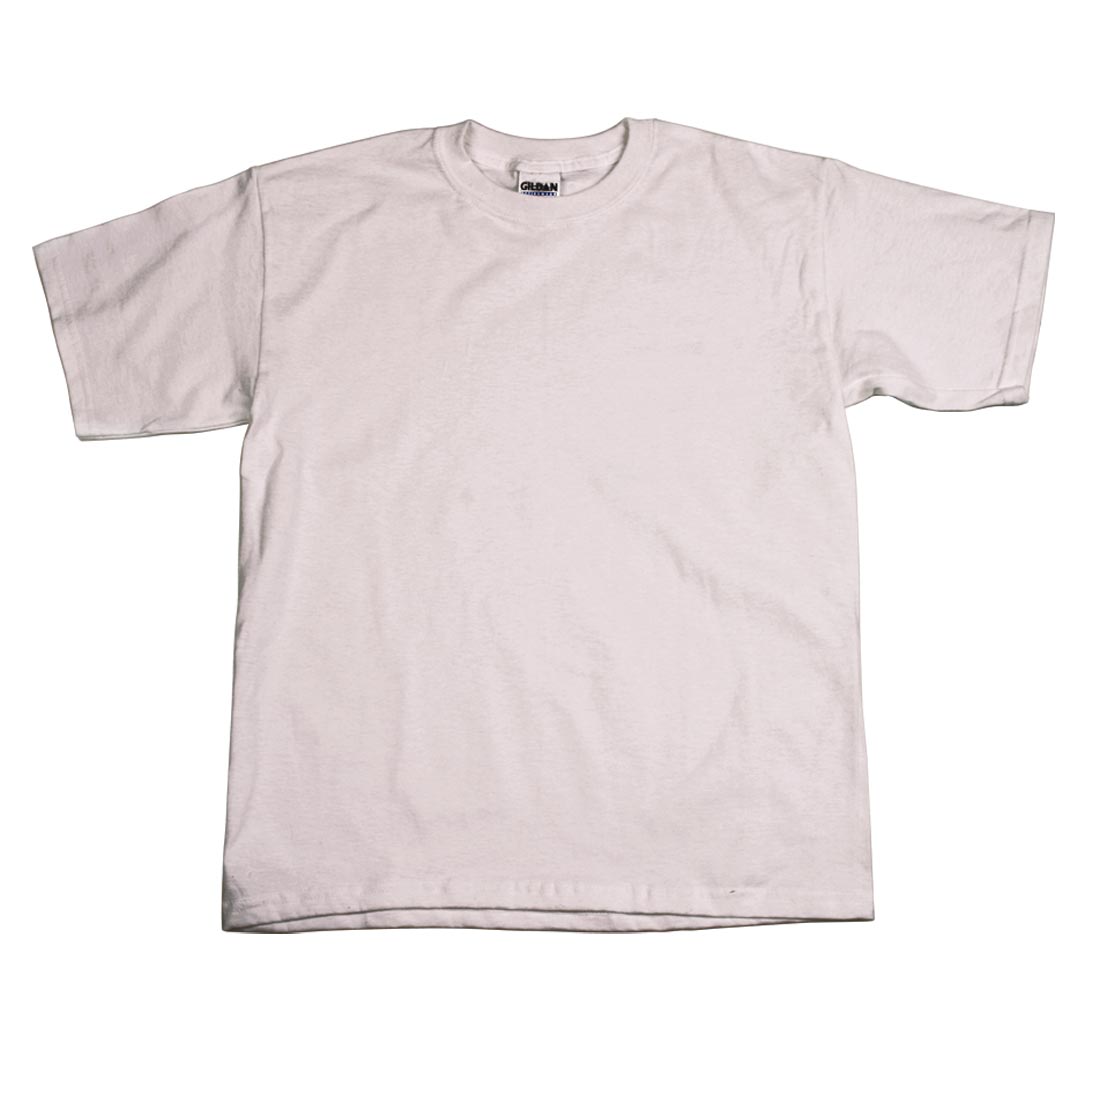 Youth Small Plain White T-Shirt